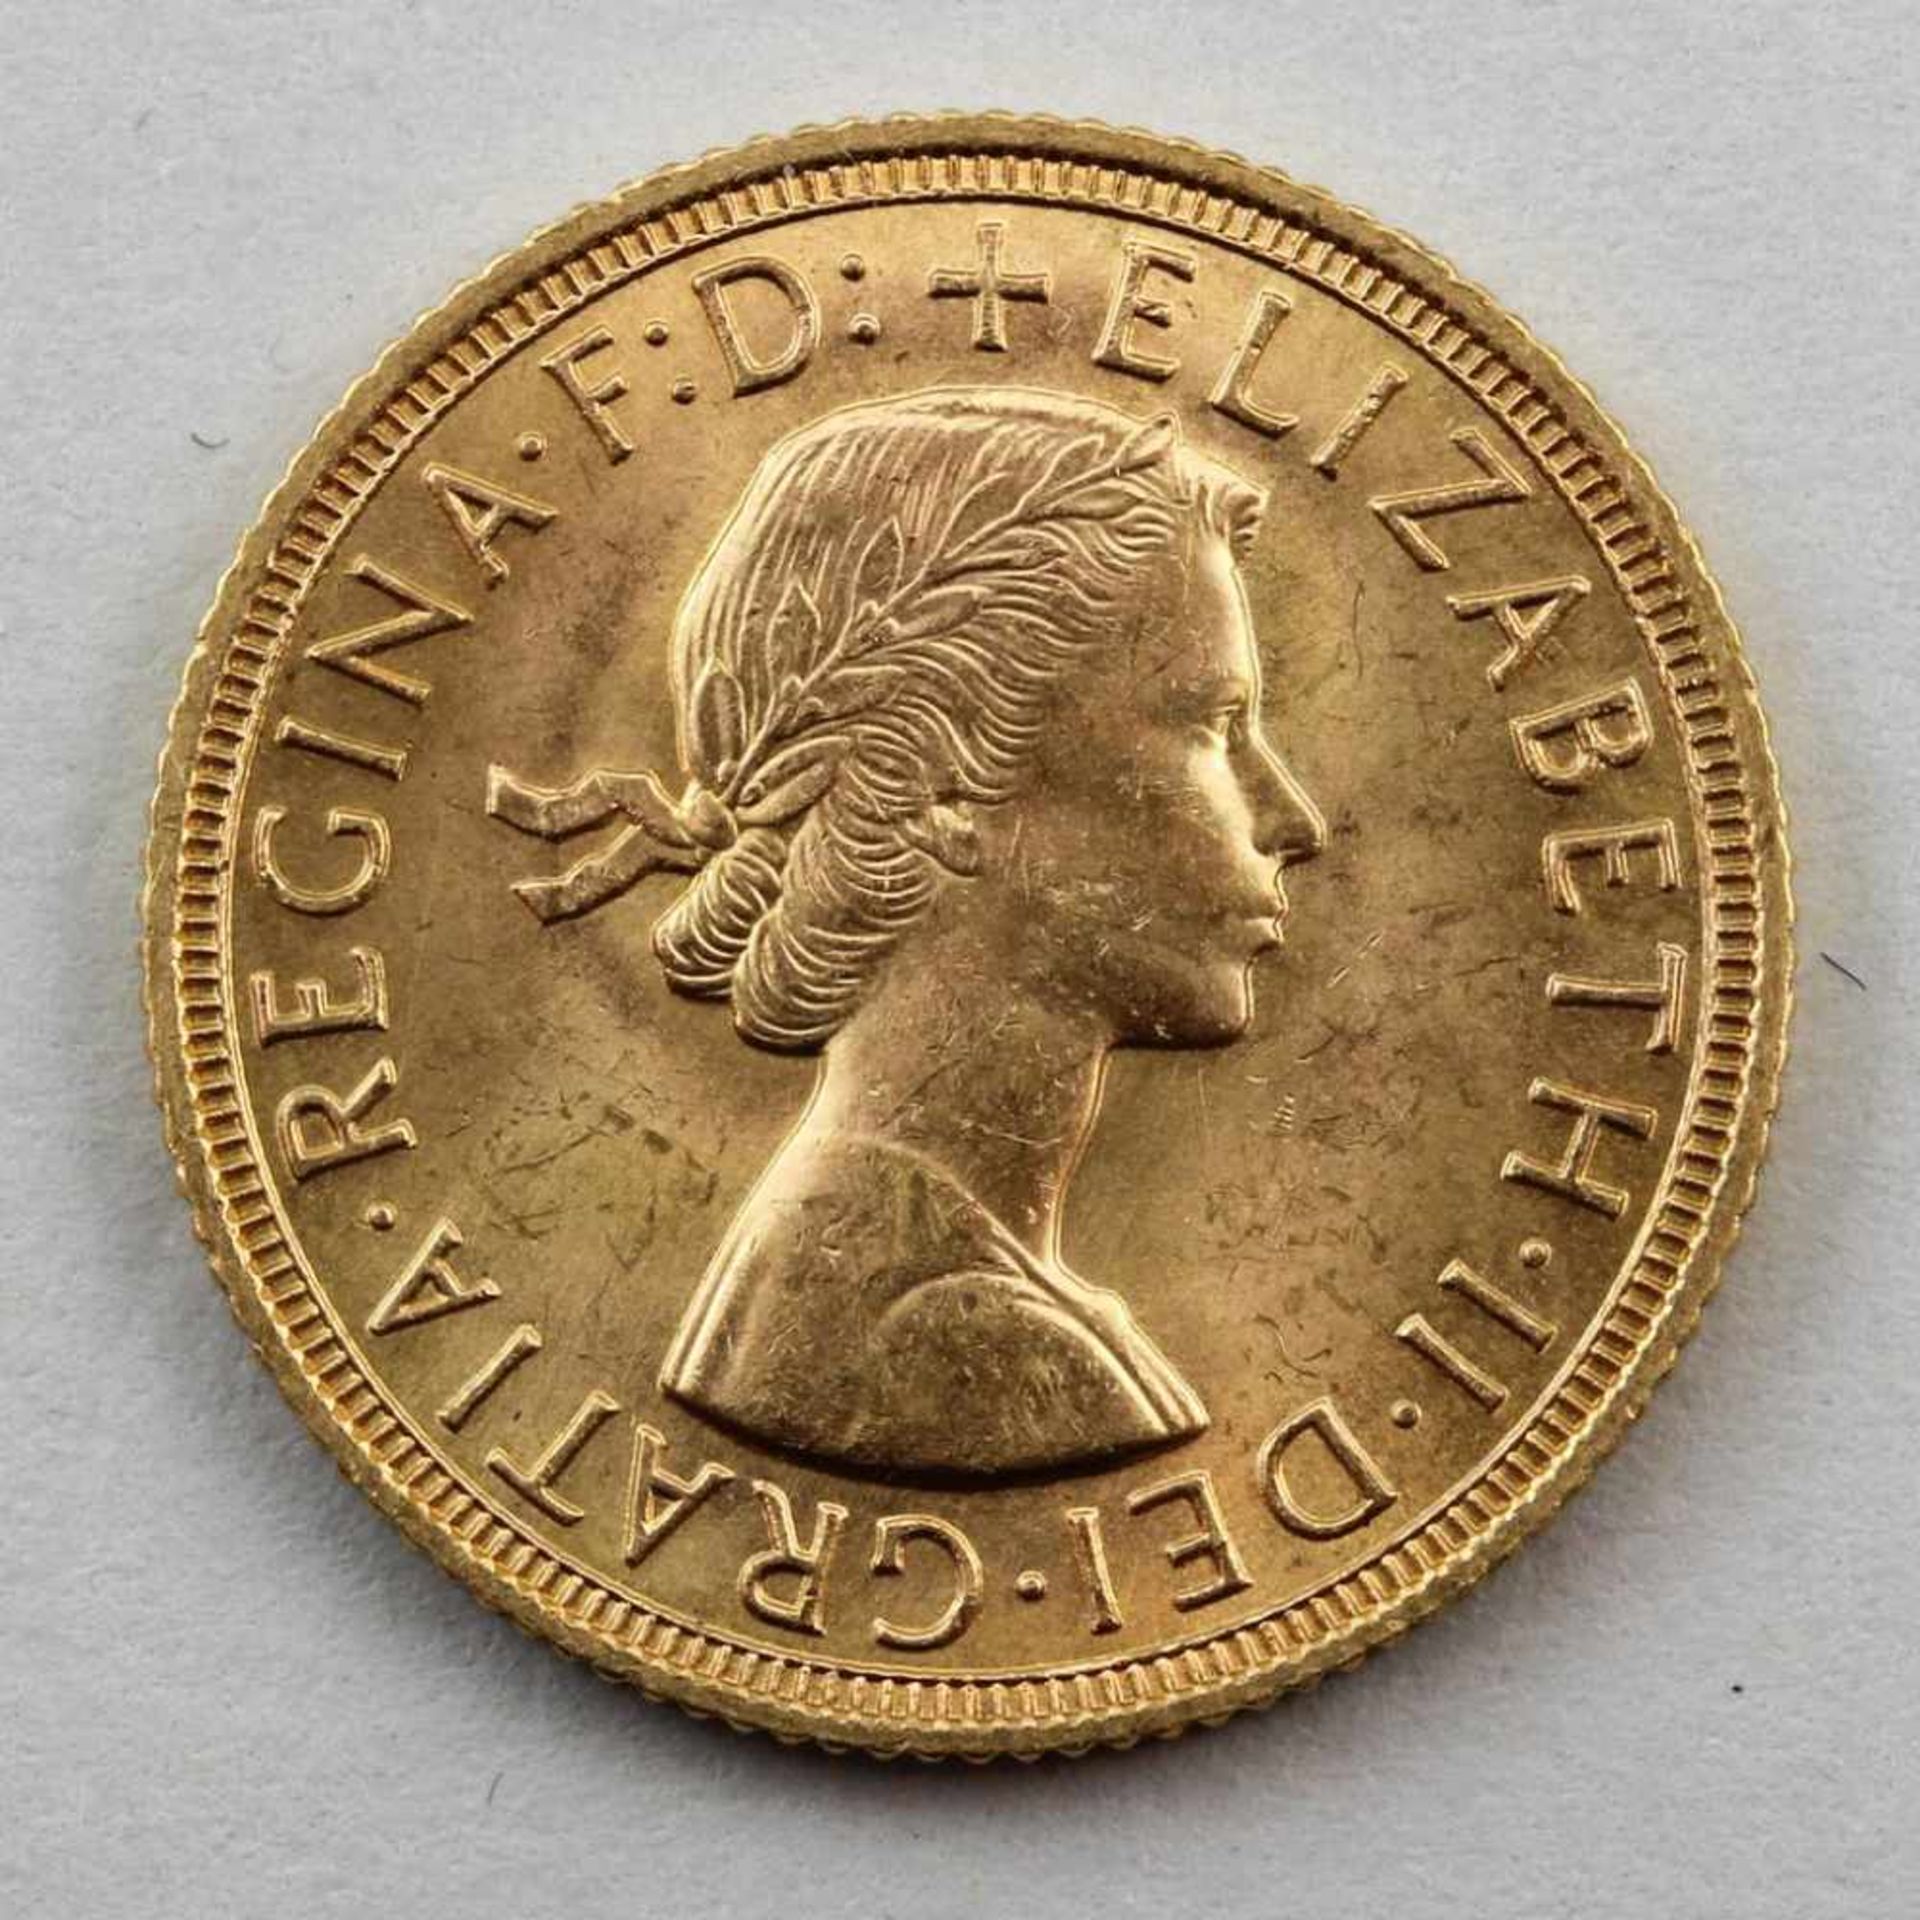 Goldmünze, England, Elisabeth II, 1 Sovereign, 1958.916/000 GG, 7,98 g. ss.- - -19.33 % buyer's